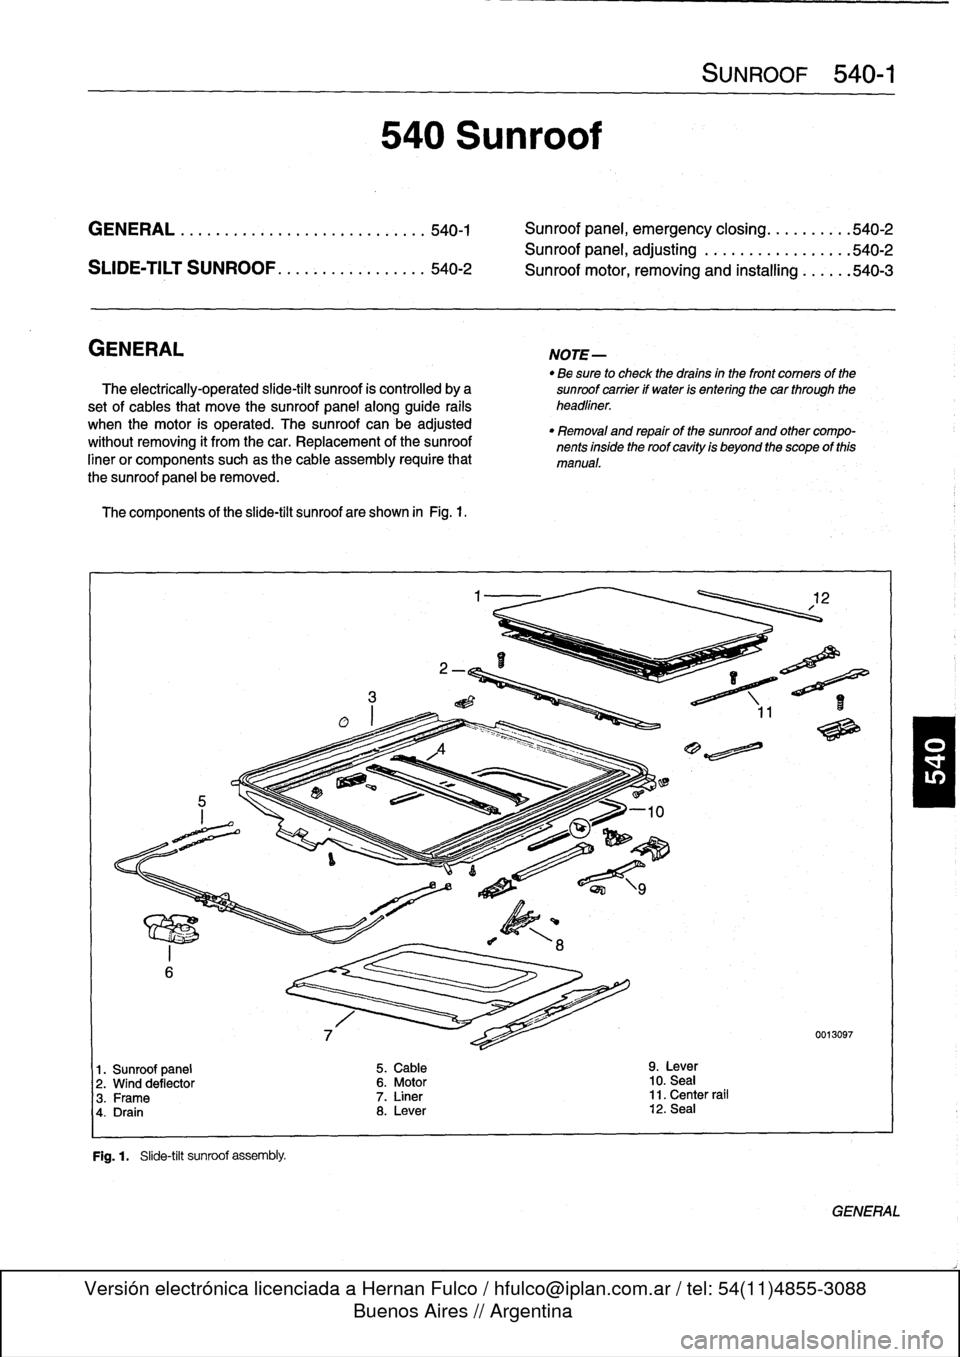 BMW M3 1996 E36 Workshop Manual 
GENERAL
...
.
.
.
.
.
................
.
.
.
.
540-1

	

Sunroof
panel,
emergency
closing
.......
.
.
.540-2

Sunroof
panel,
adjusting
..
.
...........
.
.
.540-2

SUDE-TILT
SUNROOF
.
.
.
.
.
.
.
.
.